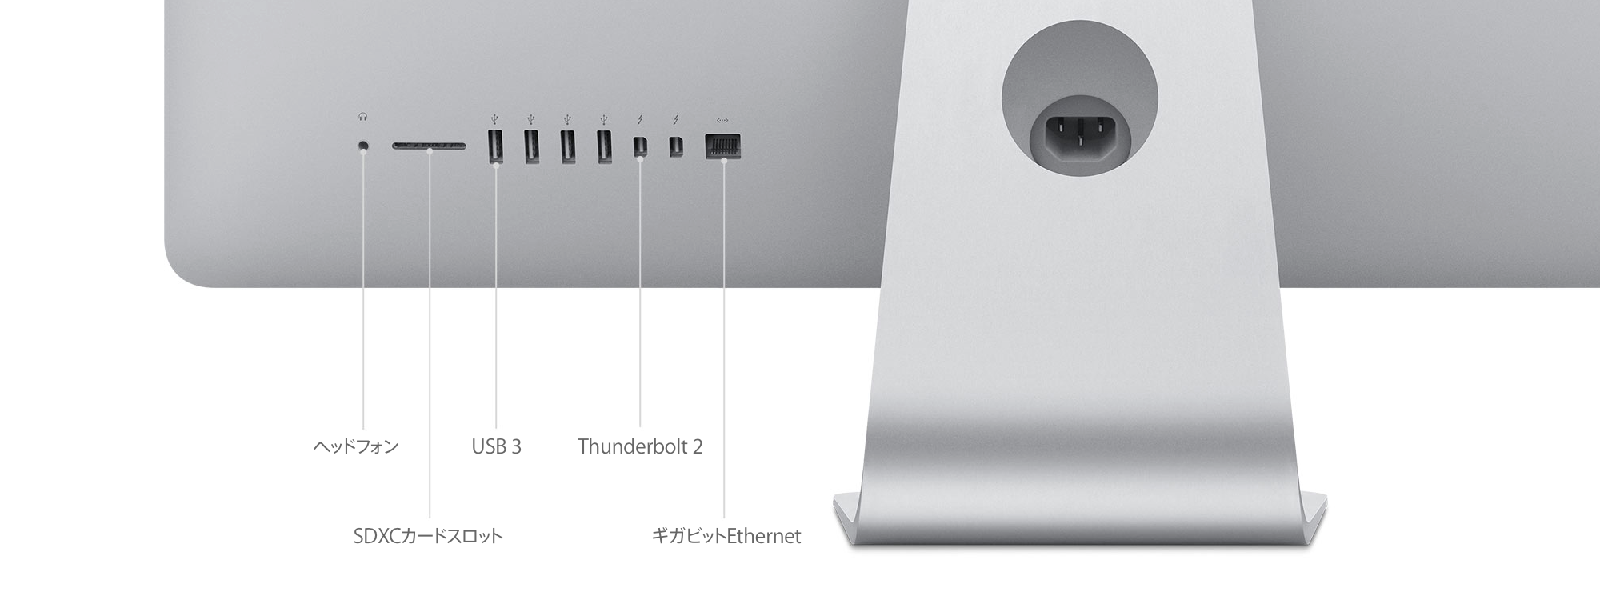 iMac (Retina 5K, 27-inch, Late 2015) - 技術仕様 - Apple サポート 